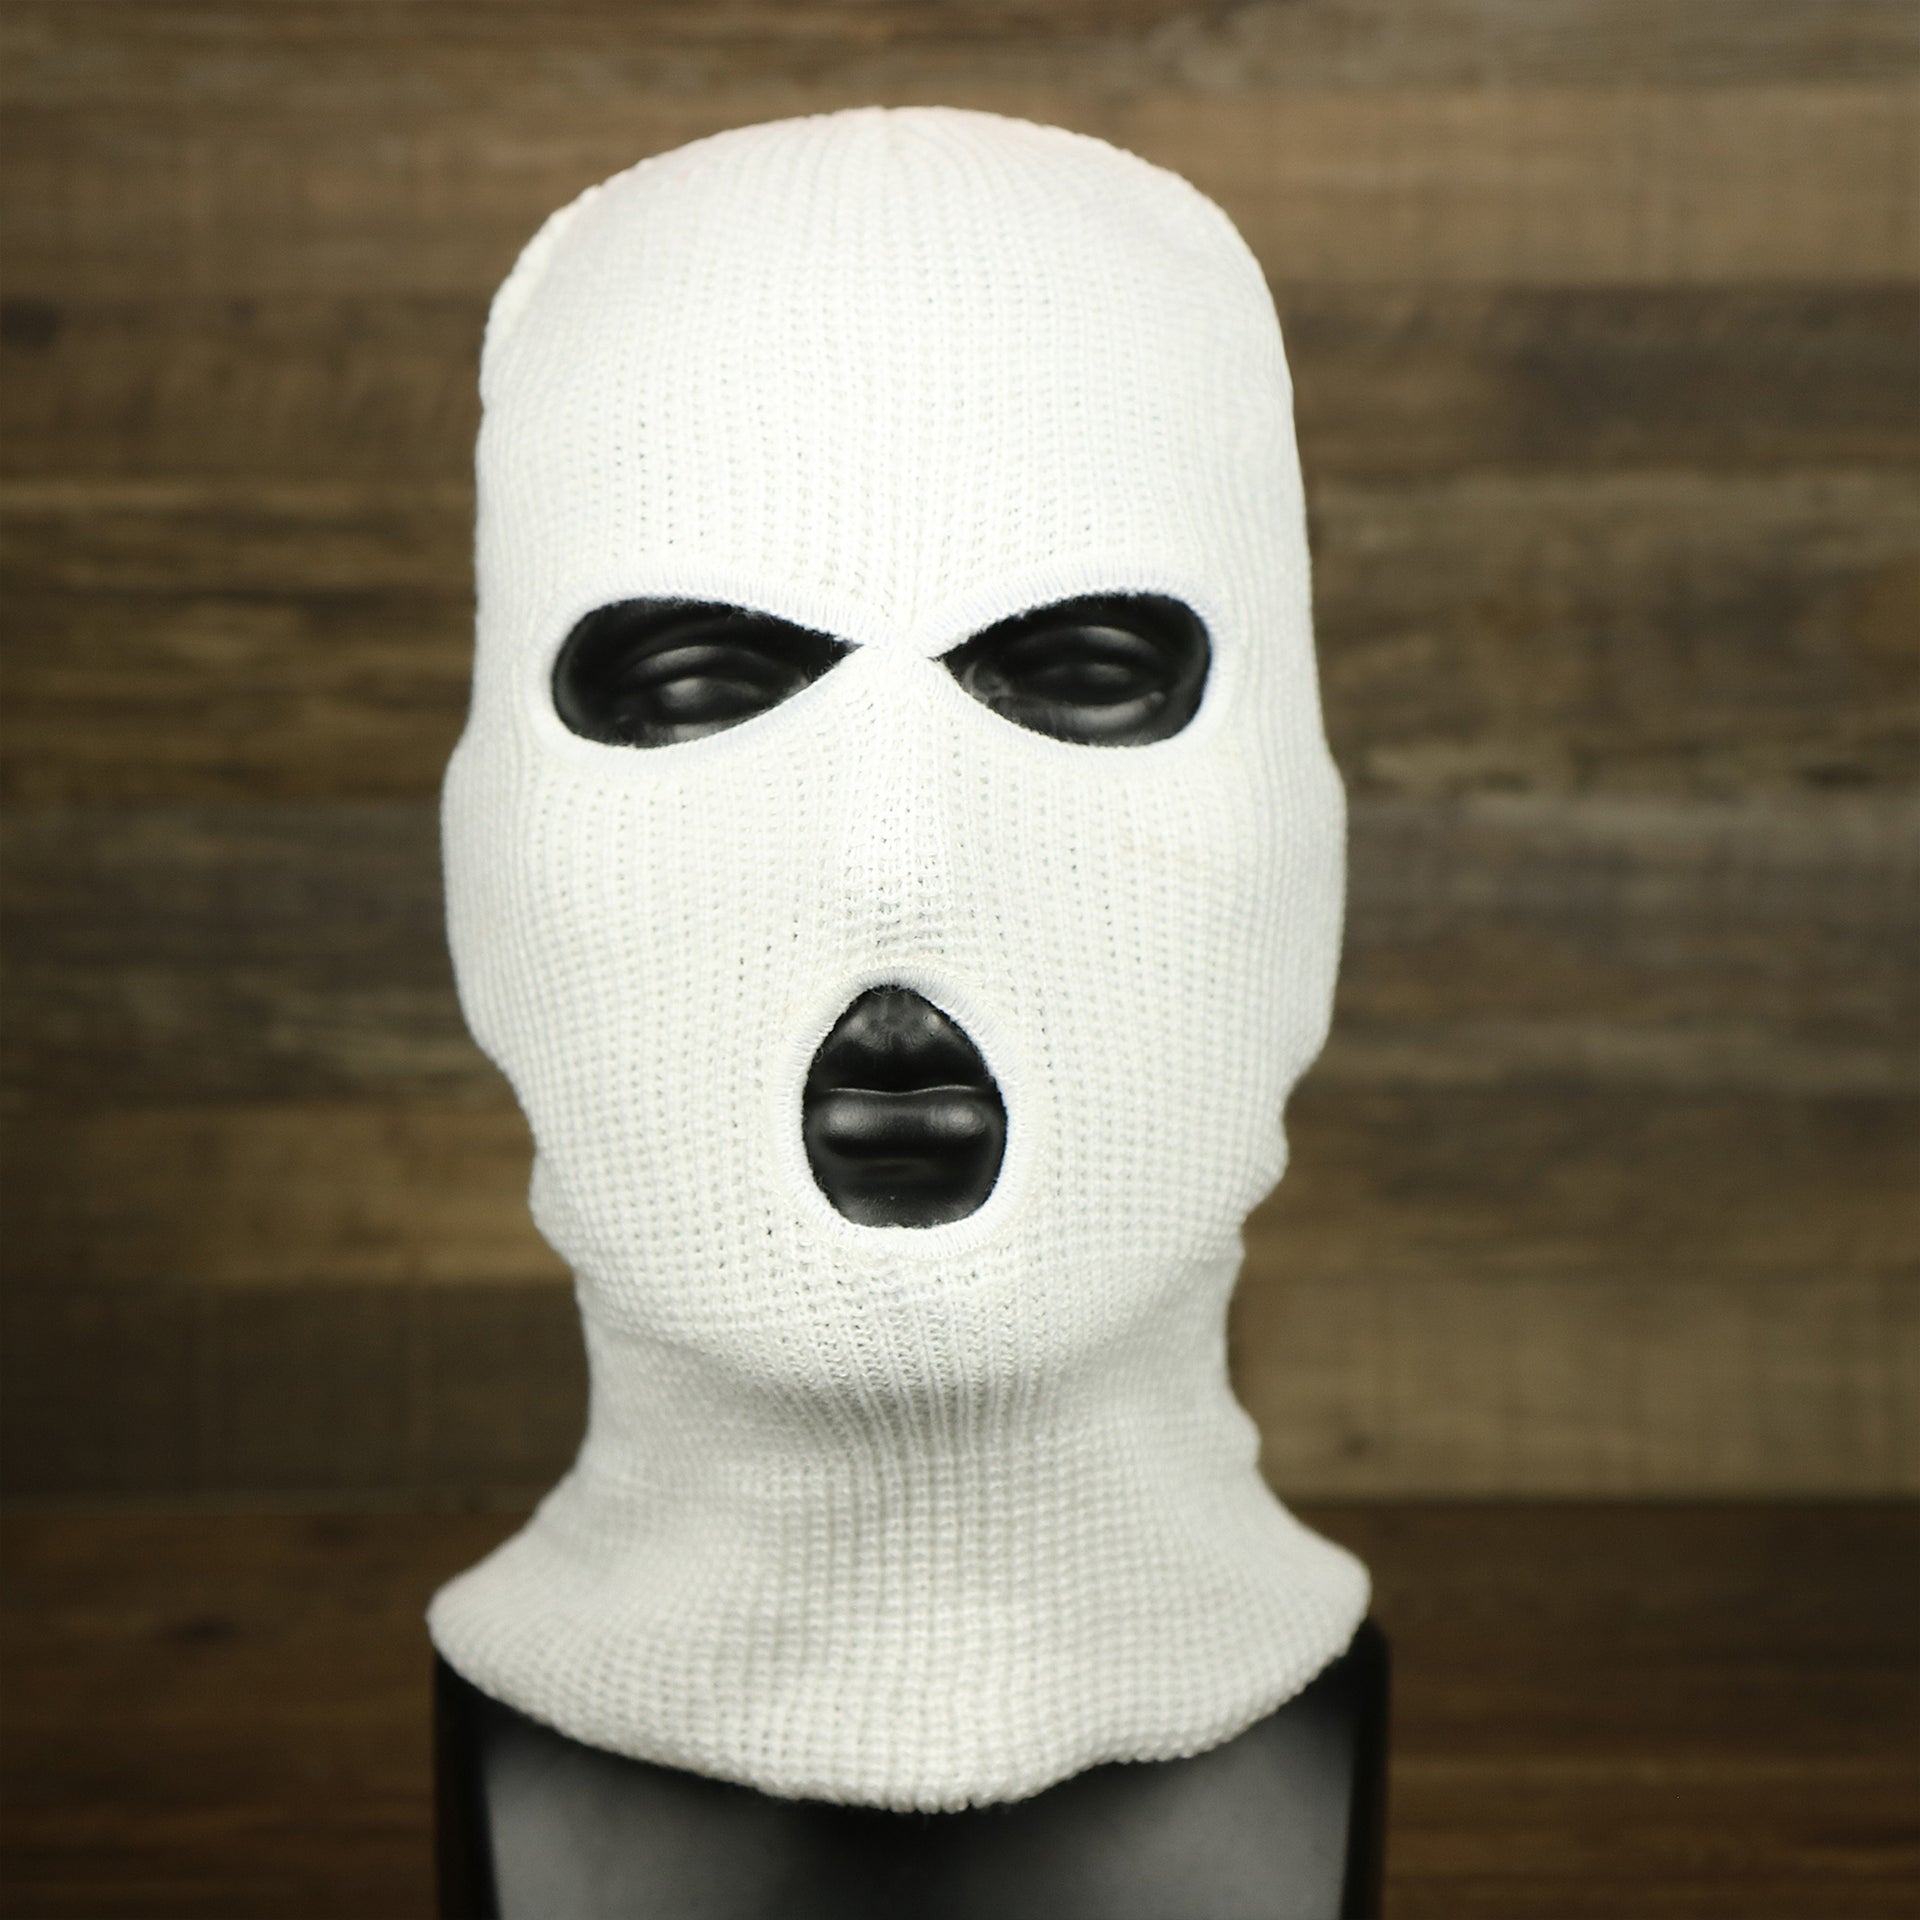 The front of the White Snug Fit Three Hole Balaclava | White Knit Ski Mask